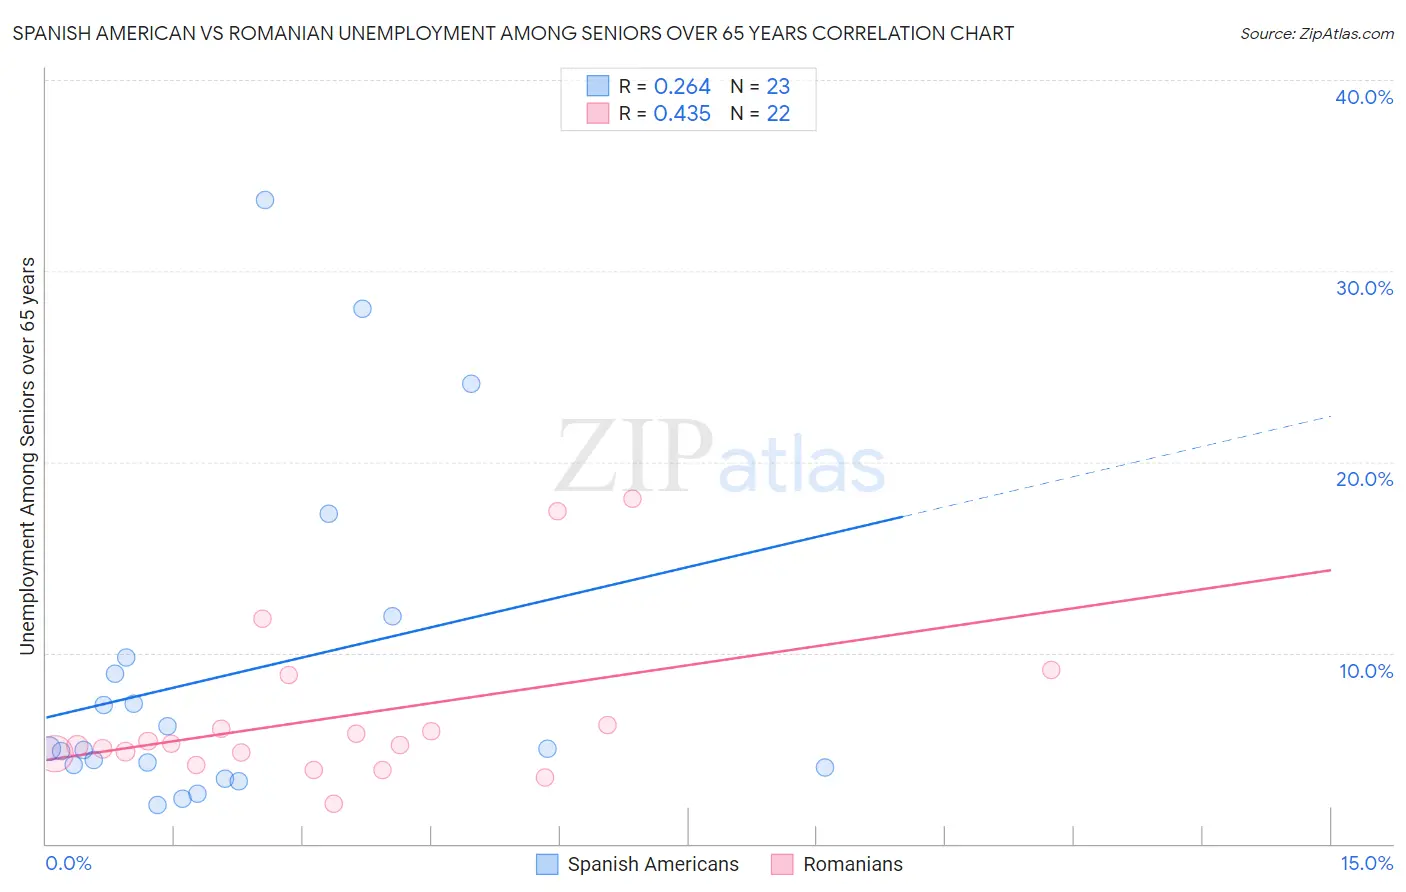 Spanish American vs Romanian Unemployment Among Seniors over 65 years